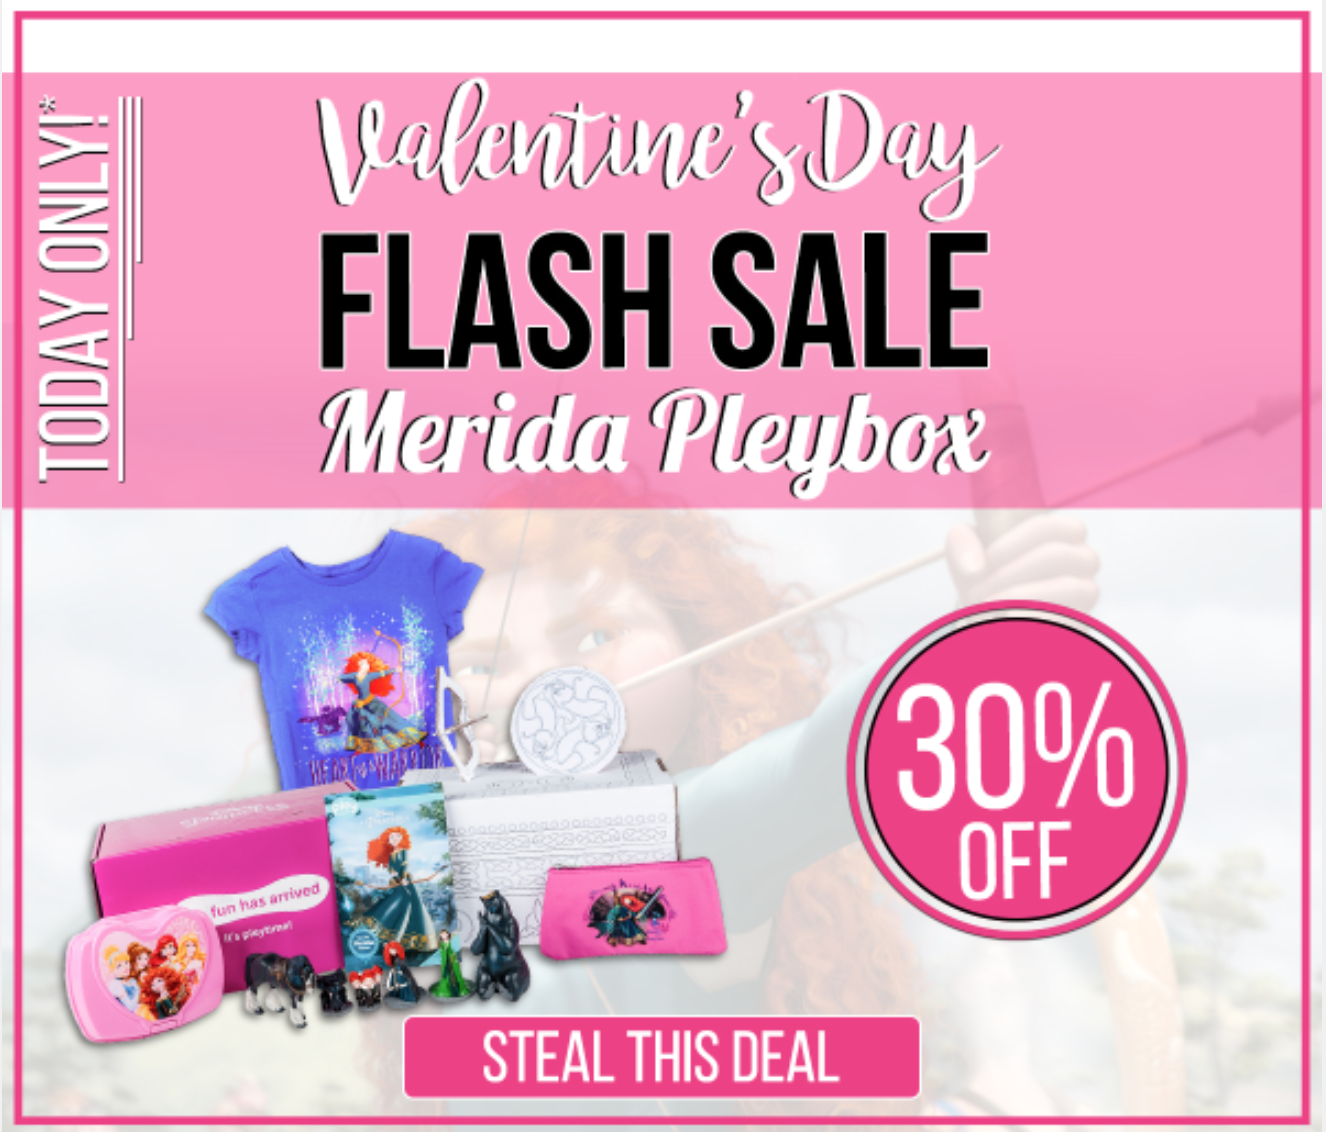 Disney Princess PleyBox Valentine’s Day Sale – 30% Off Merida PleyBox!